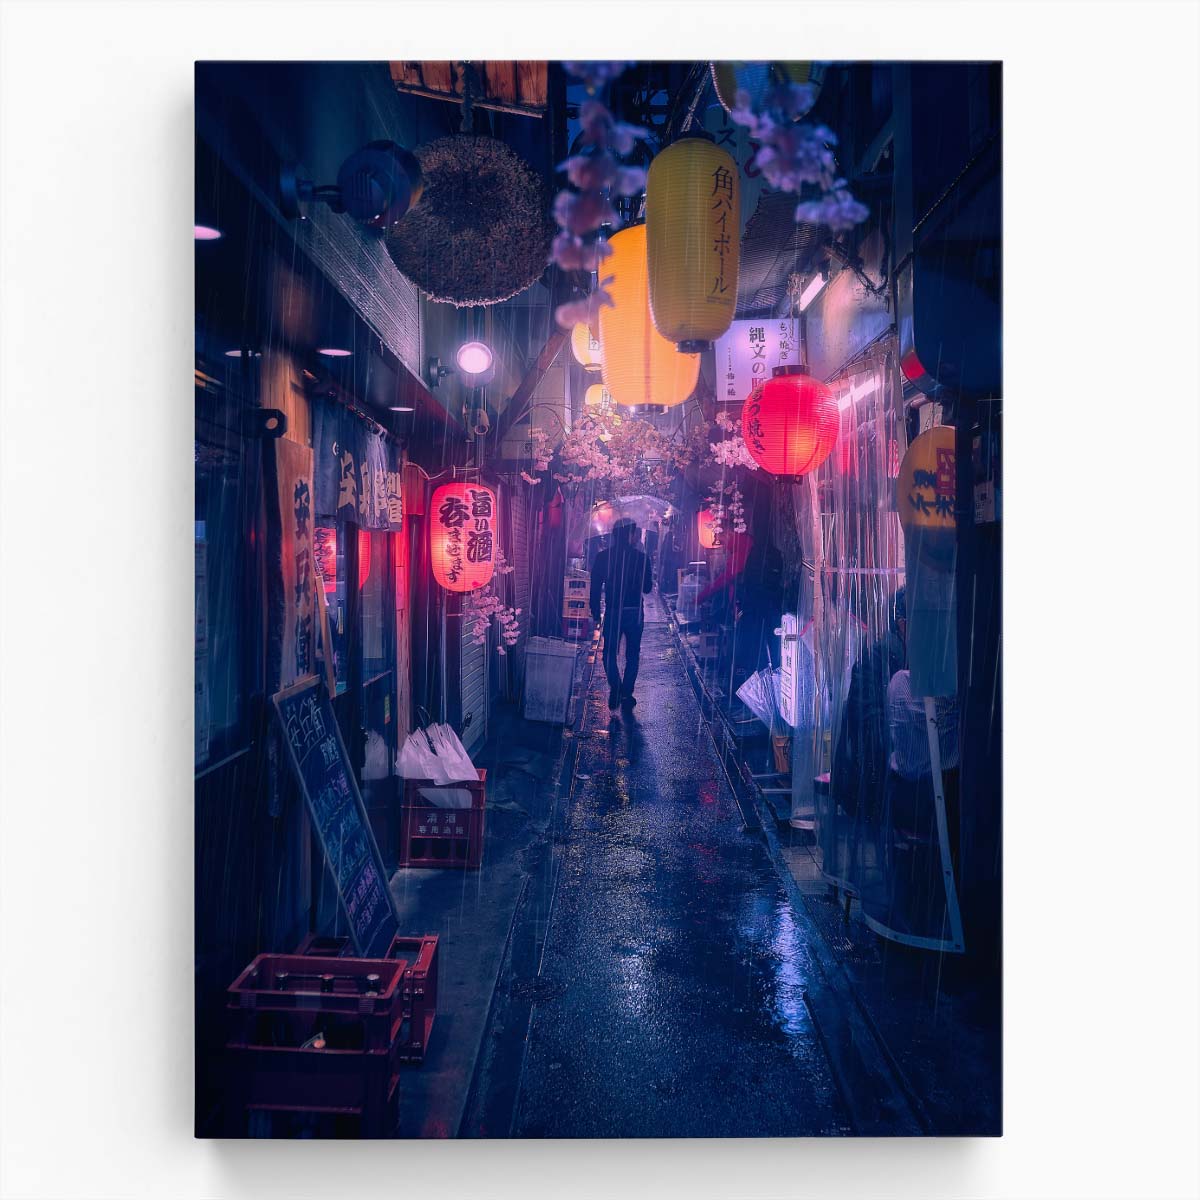 Tokyo Night Rain, Man Walking in Lantern-Lit Alley Photography by Luxuriance Designs, made in USA